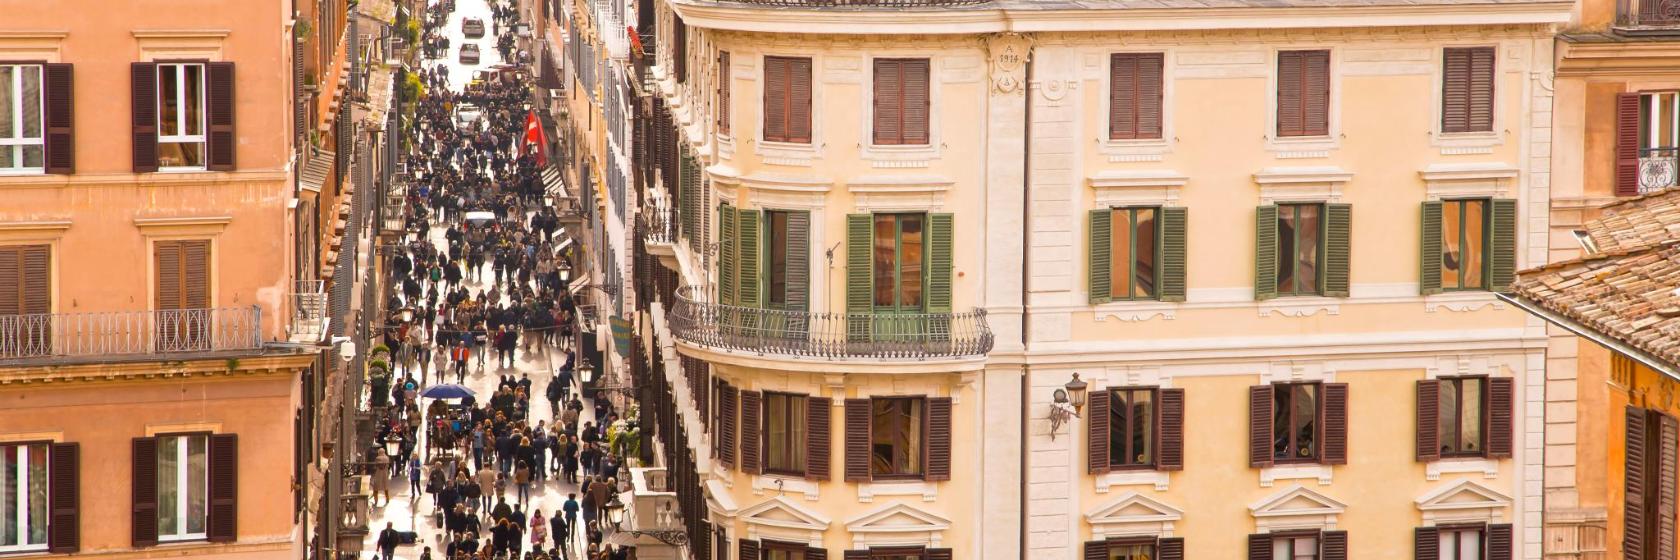 The 10 best hotels near Via Condotti in Rome, Italy